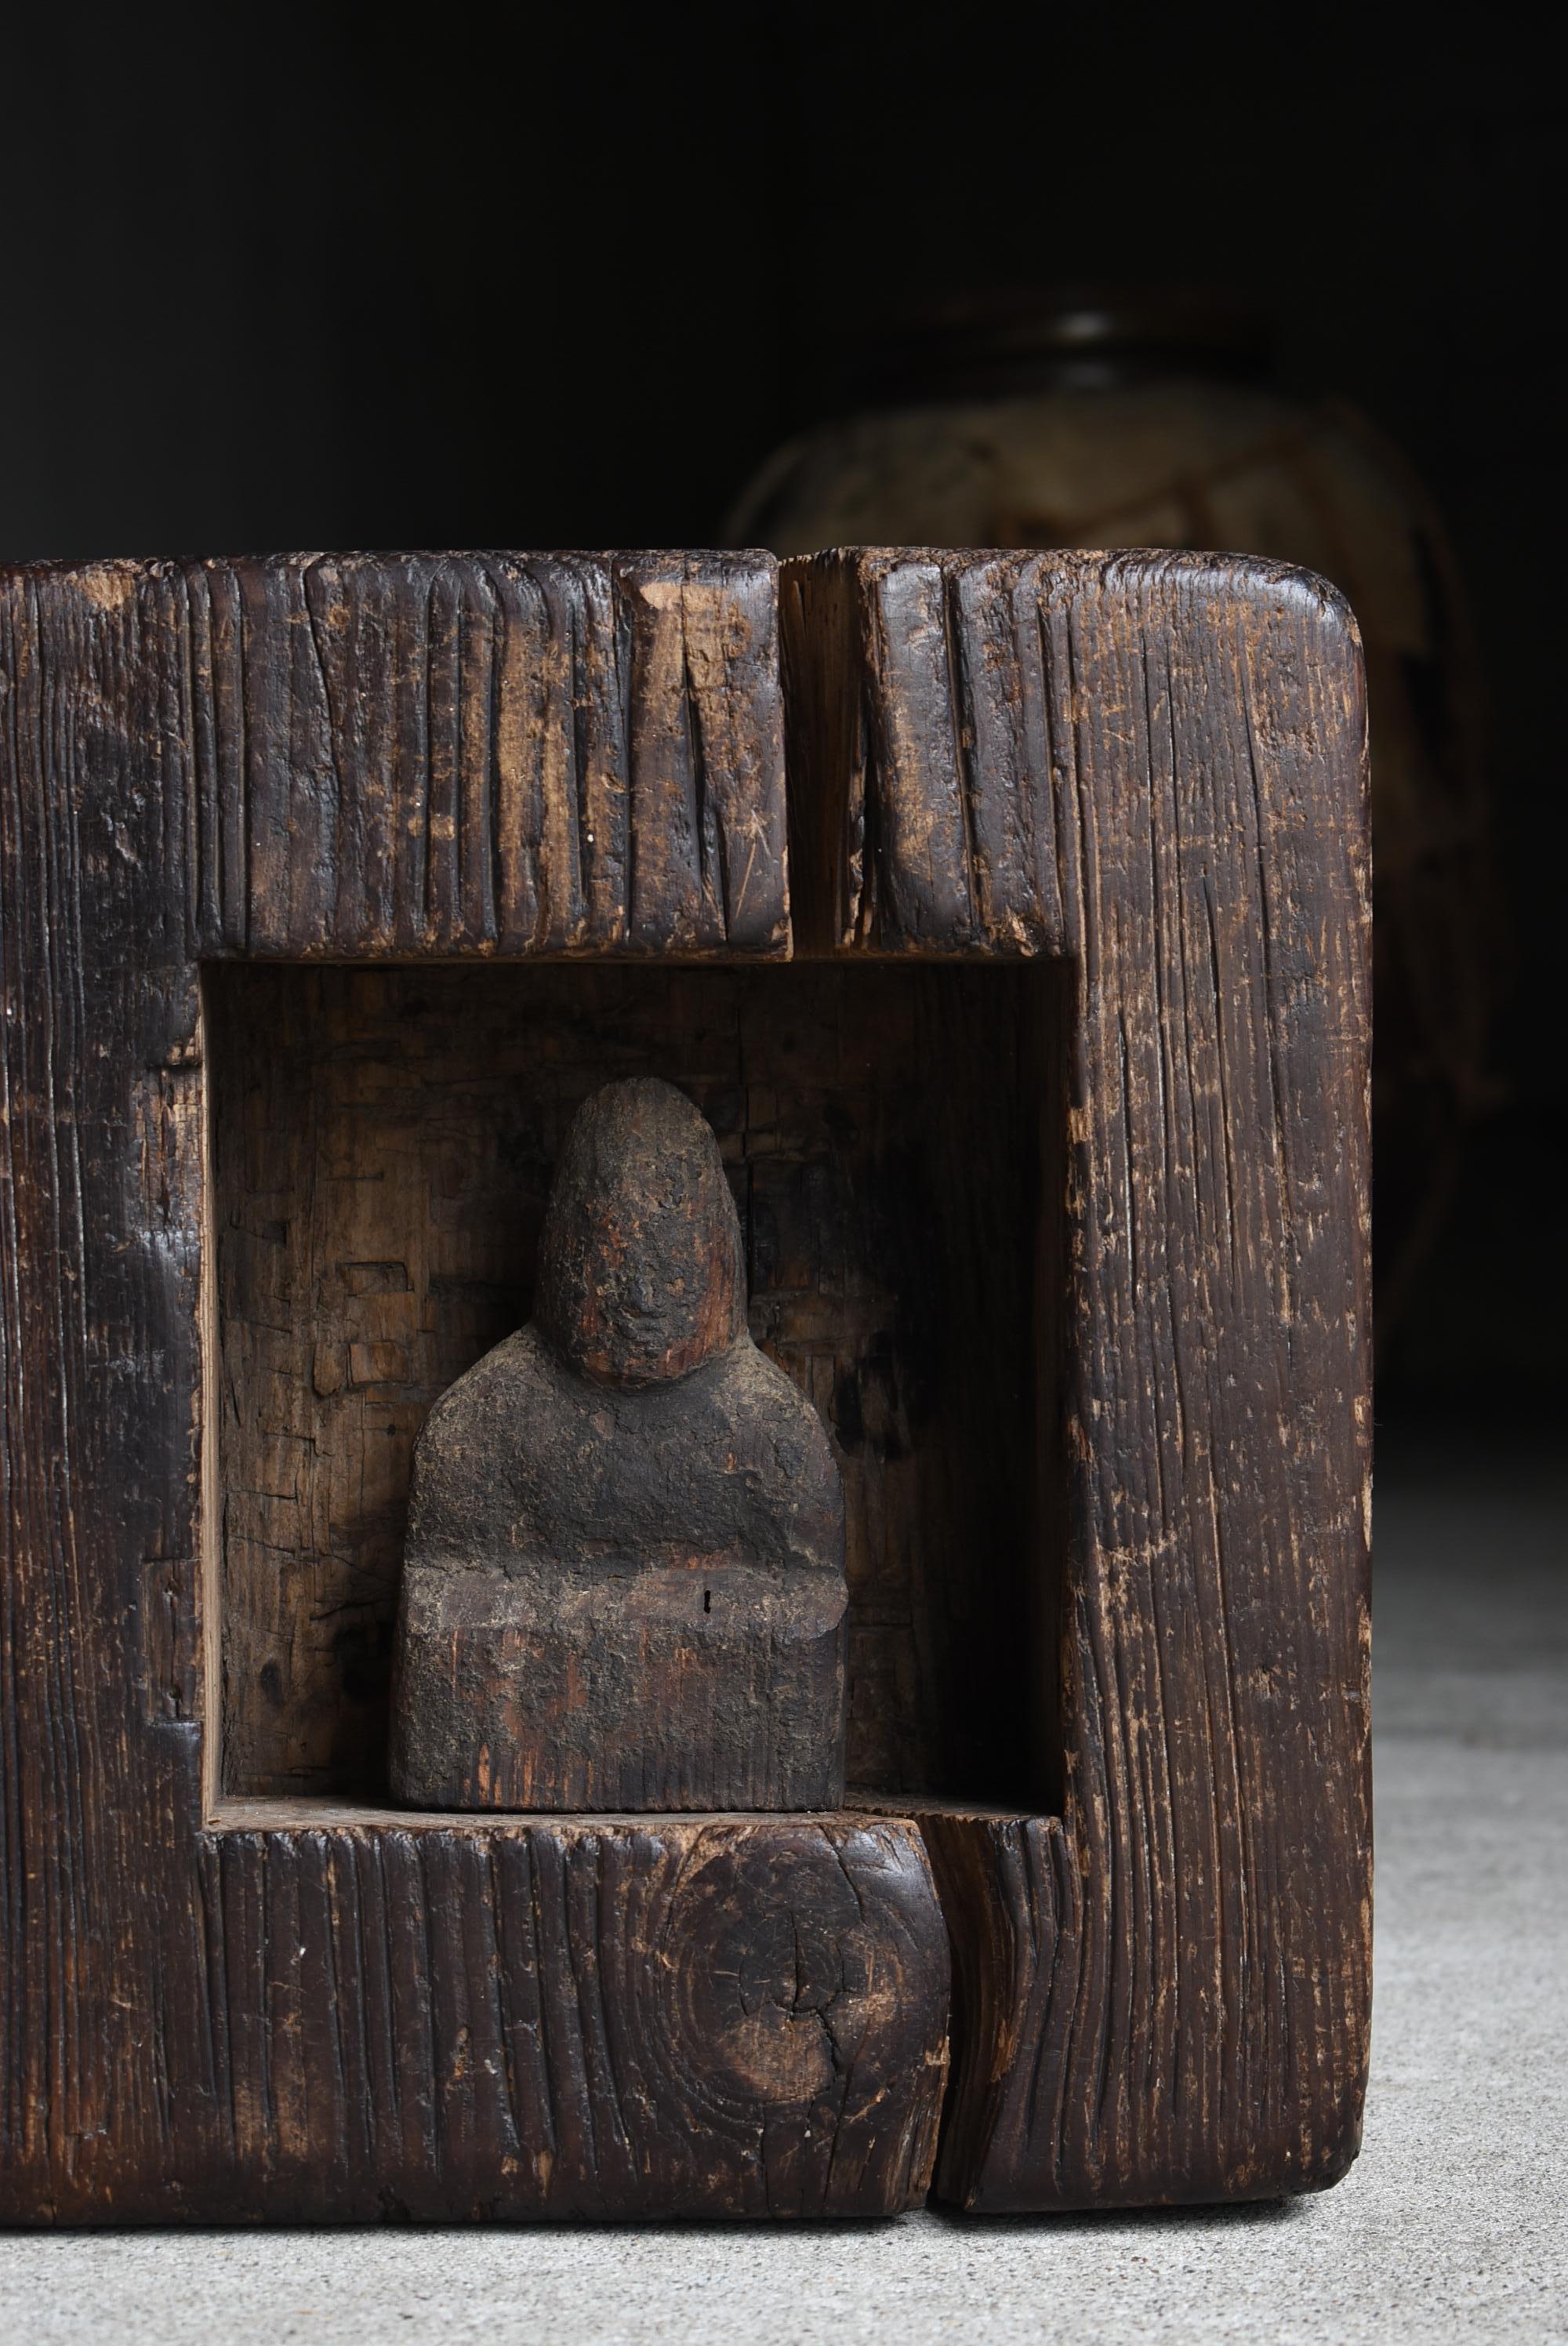 Japanese Antique Primitive Wooden Block Stool 1860s-1900s / Wood Chair Wabisabi 8